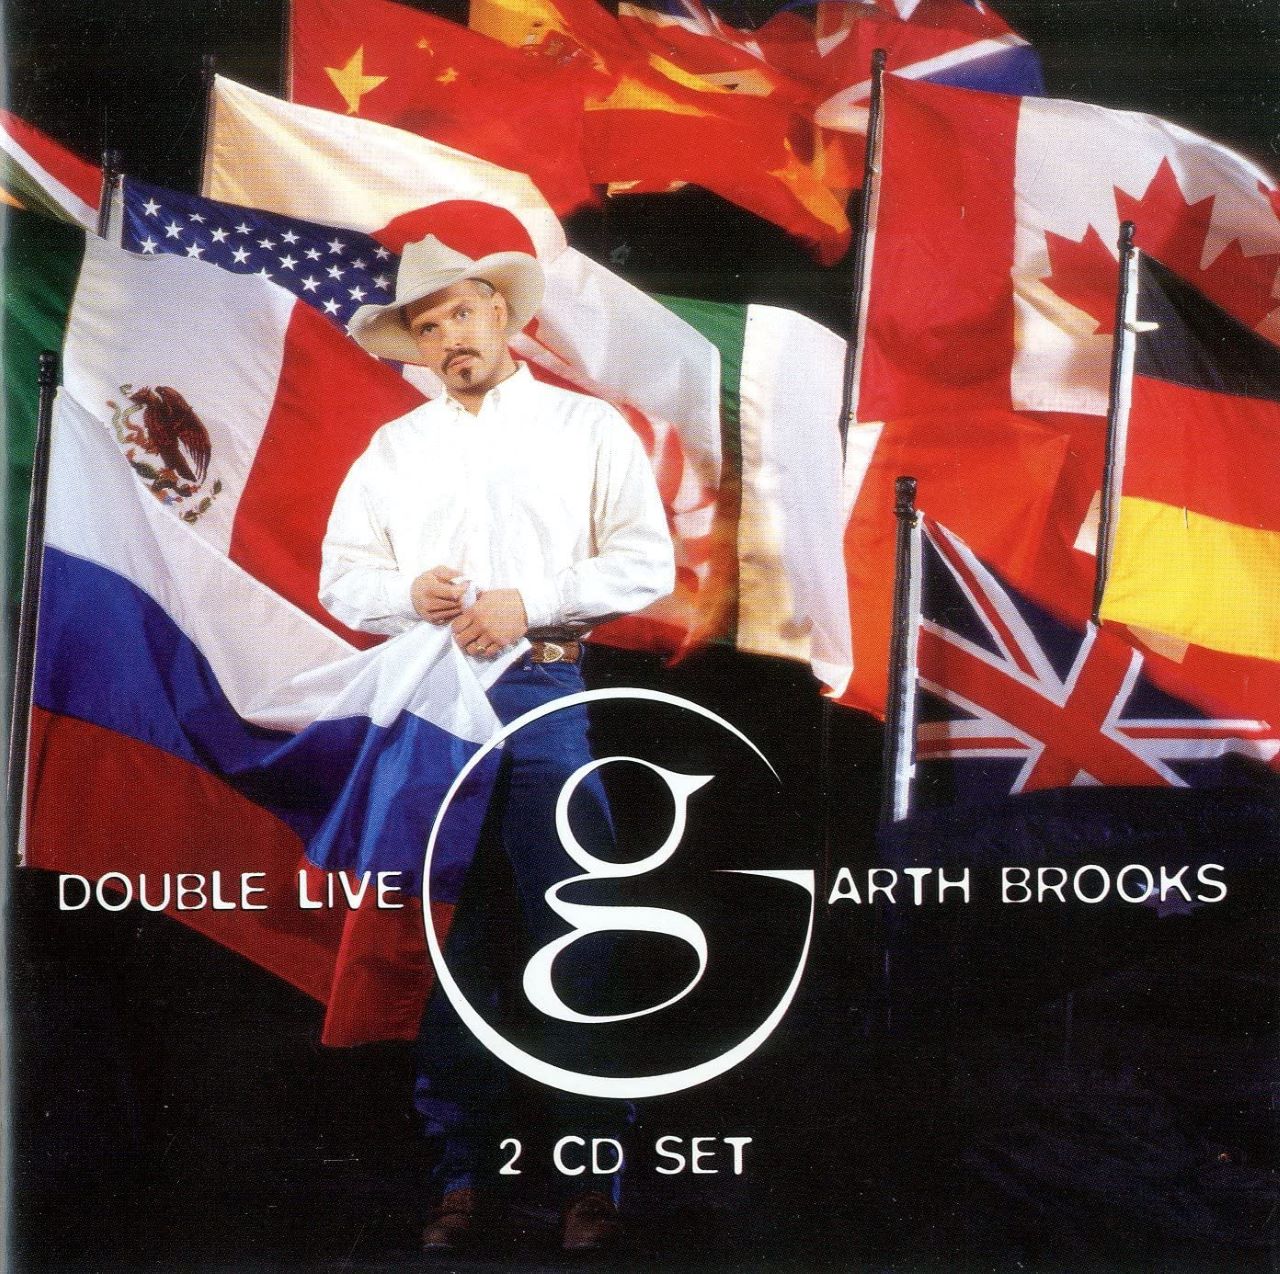 Garth Brooks - Double Live cover album